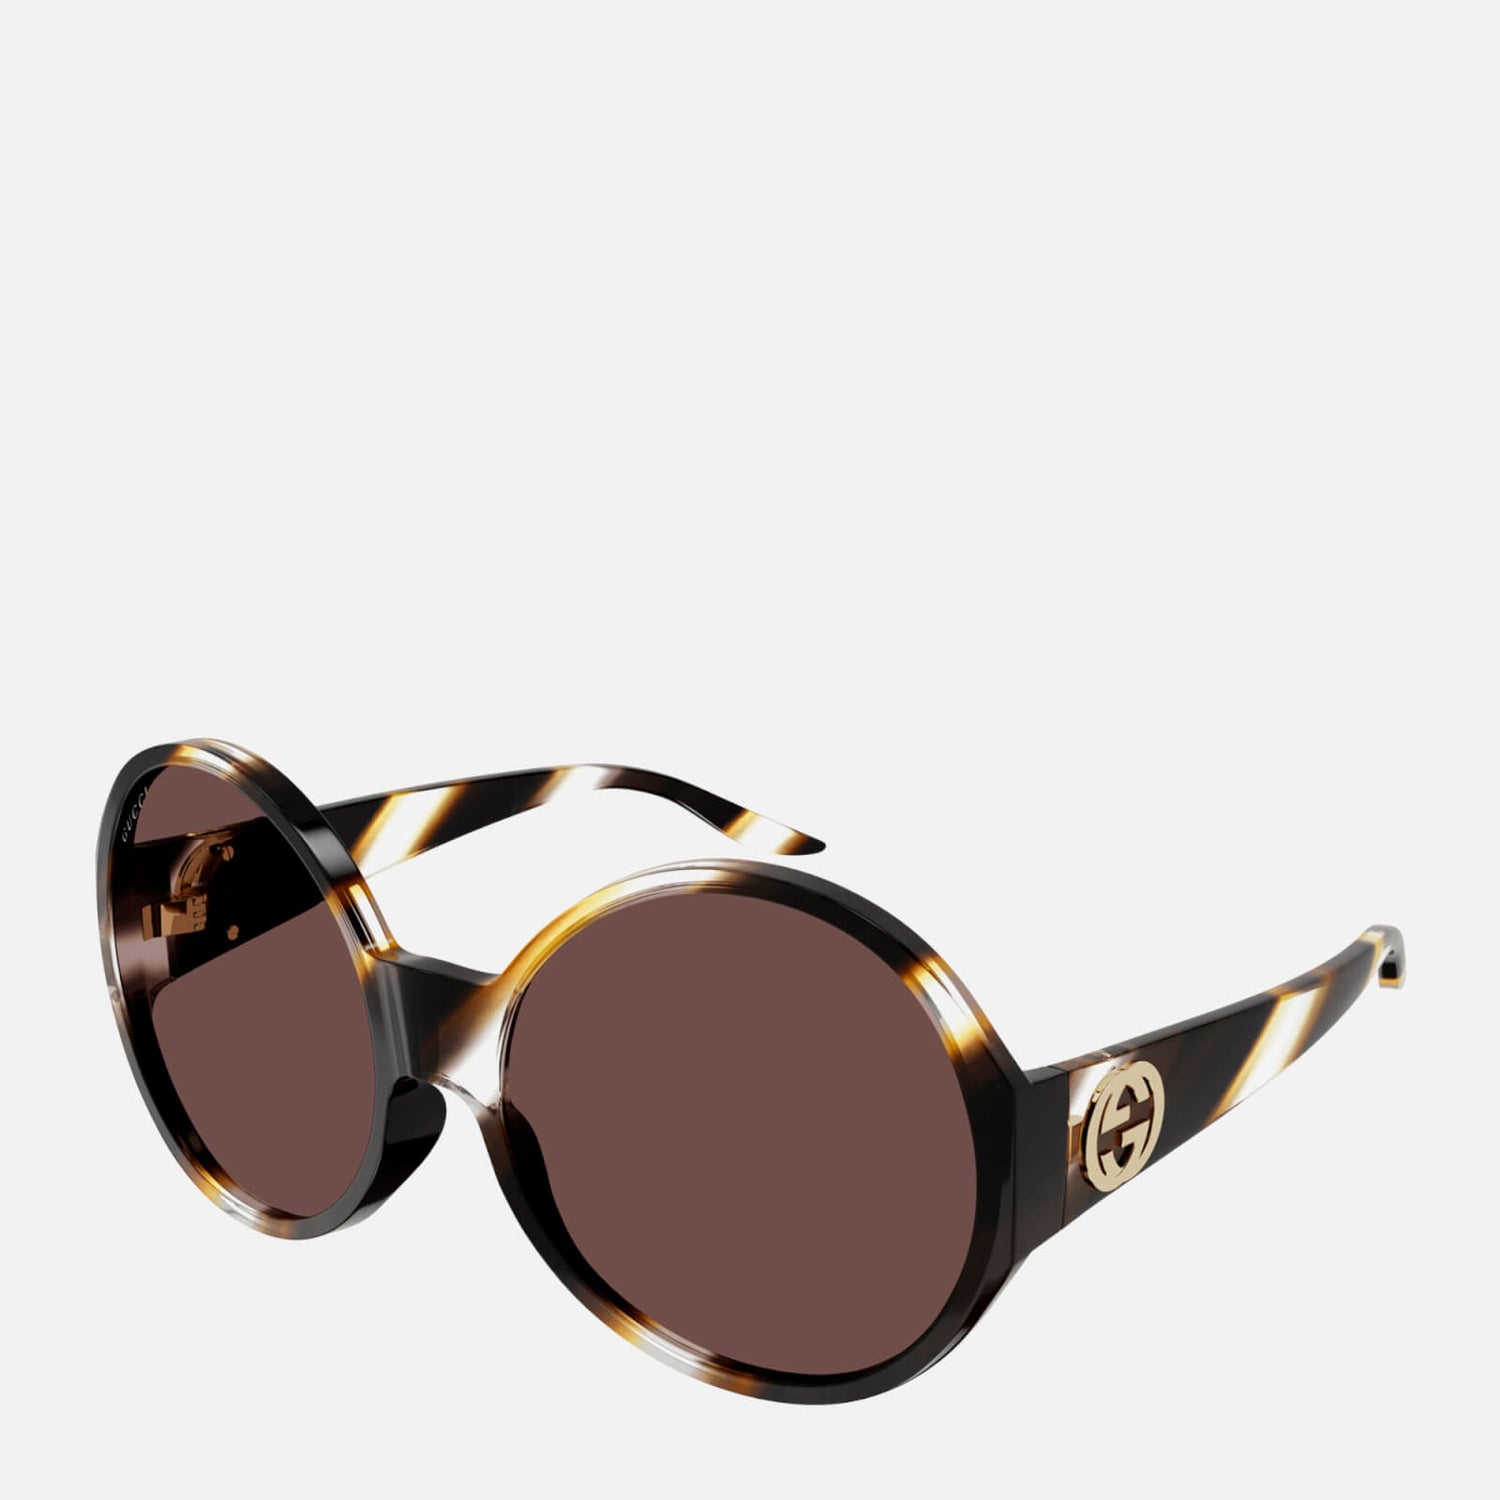 Gucci Women's Oversized Round Acetate Sunglasses - Havana/Havana/Brown